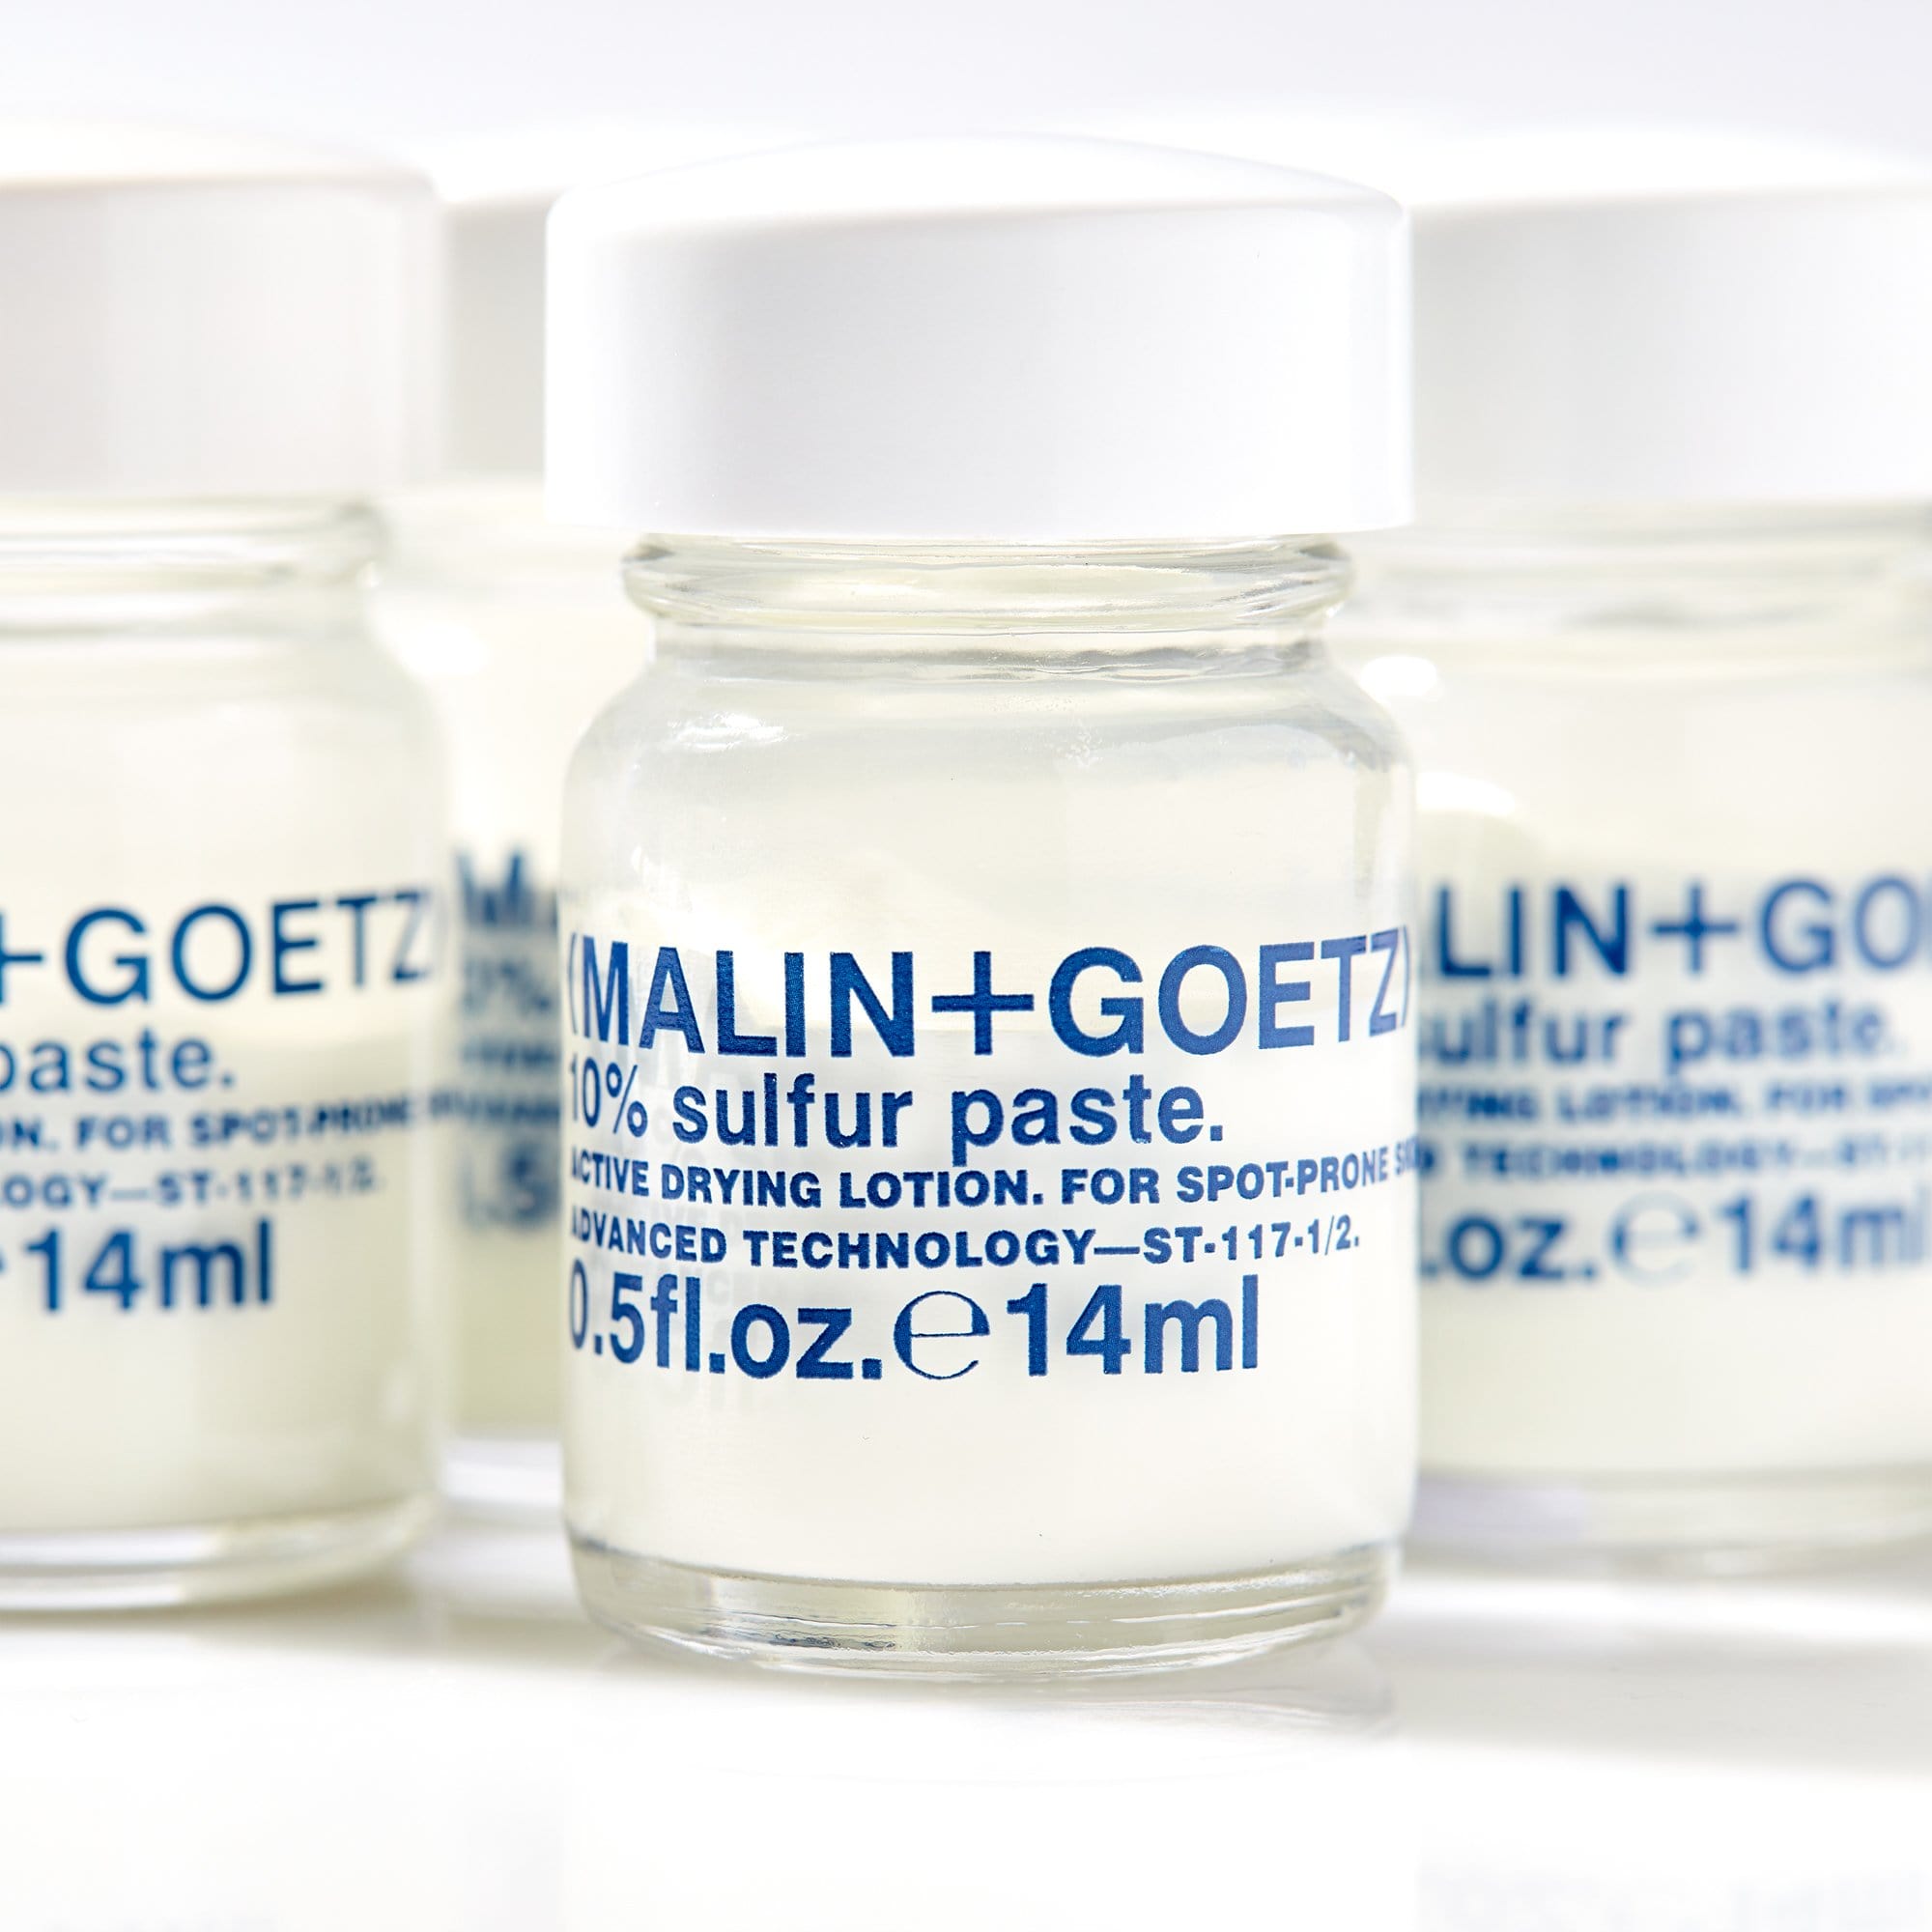 10% Sulfur Paste (MALIN+GOETZ) Tratamento do acne